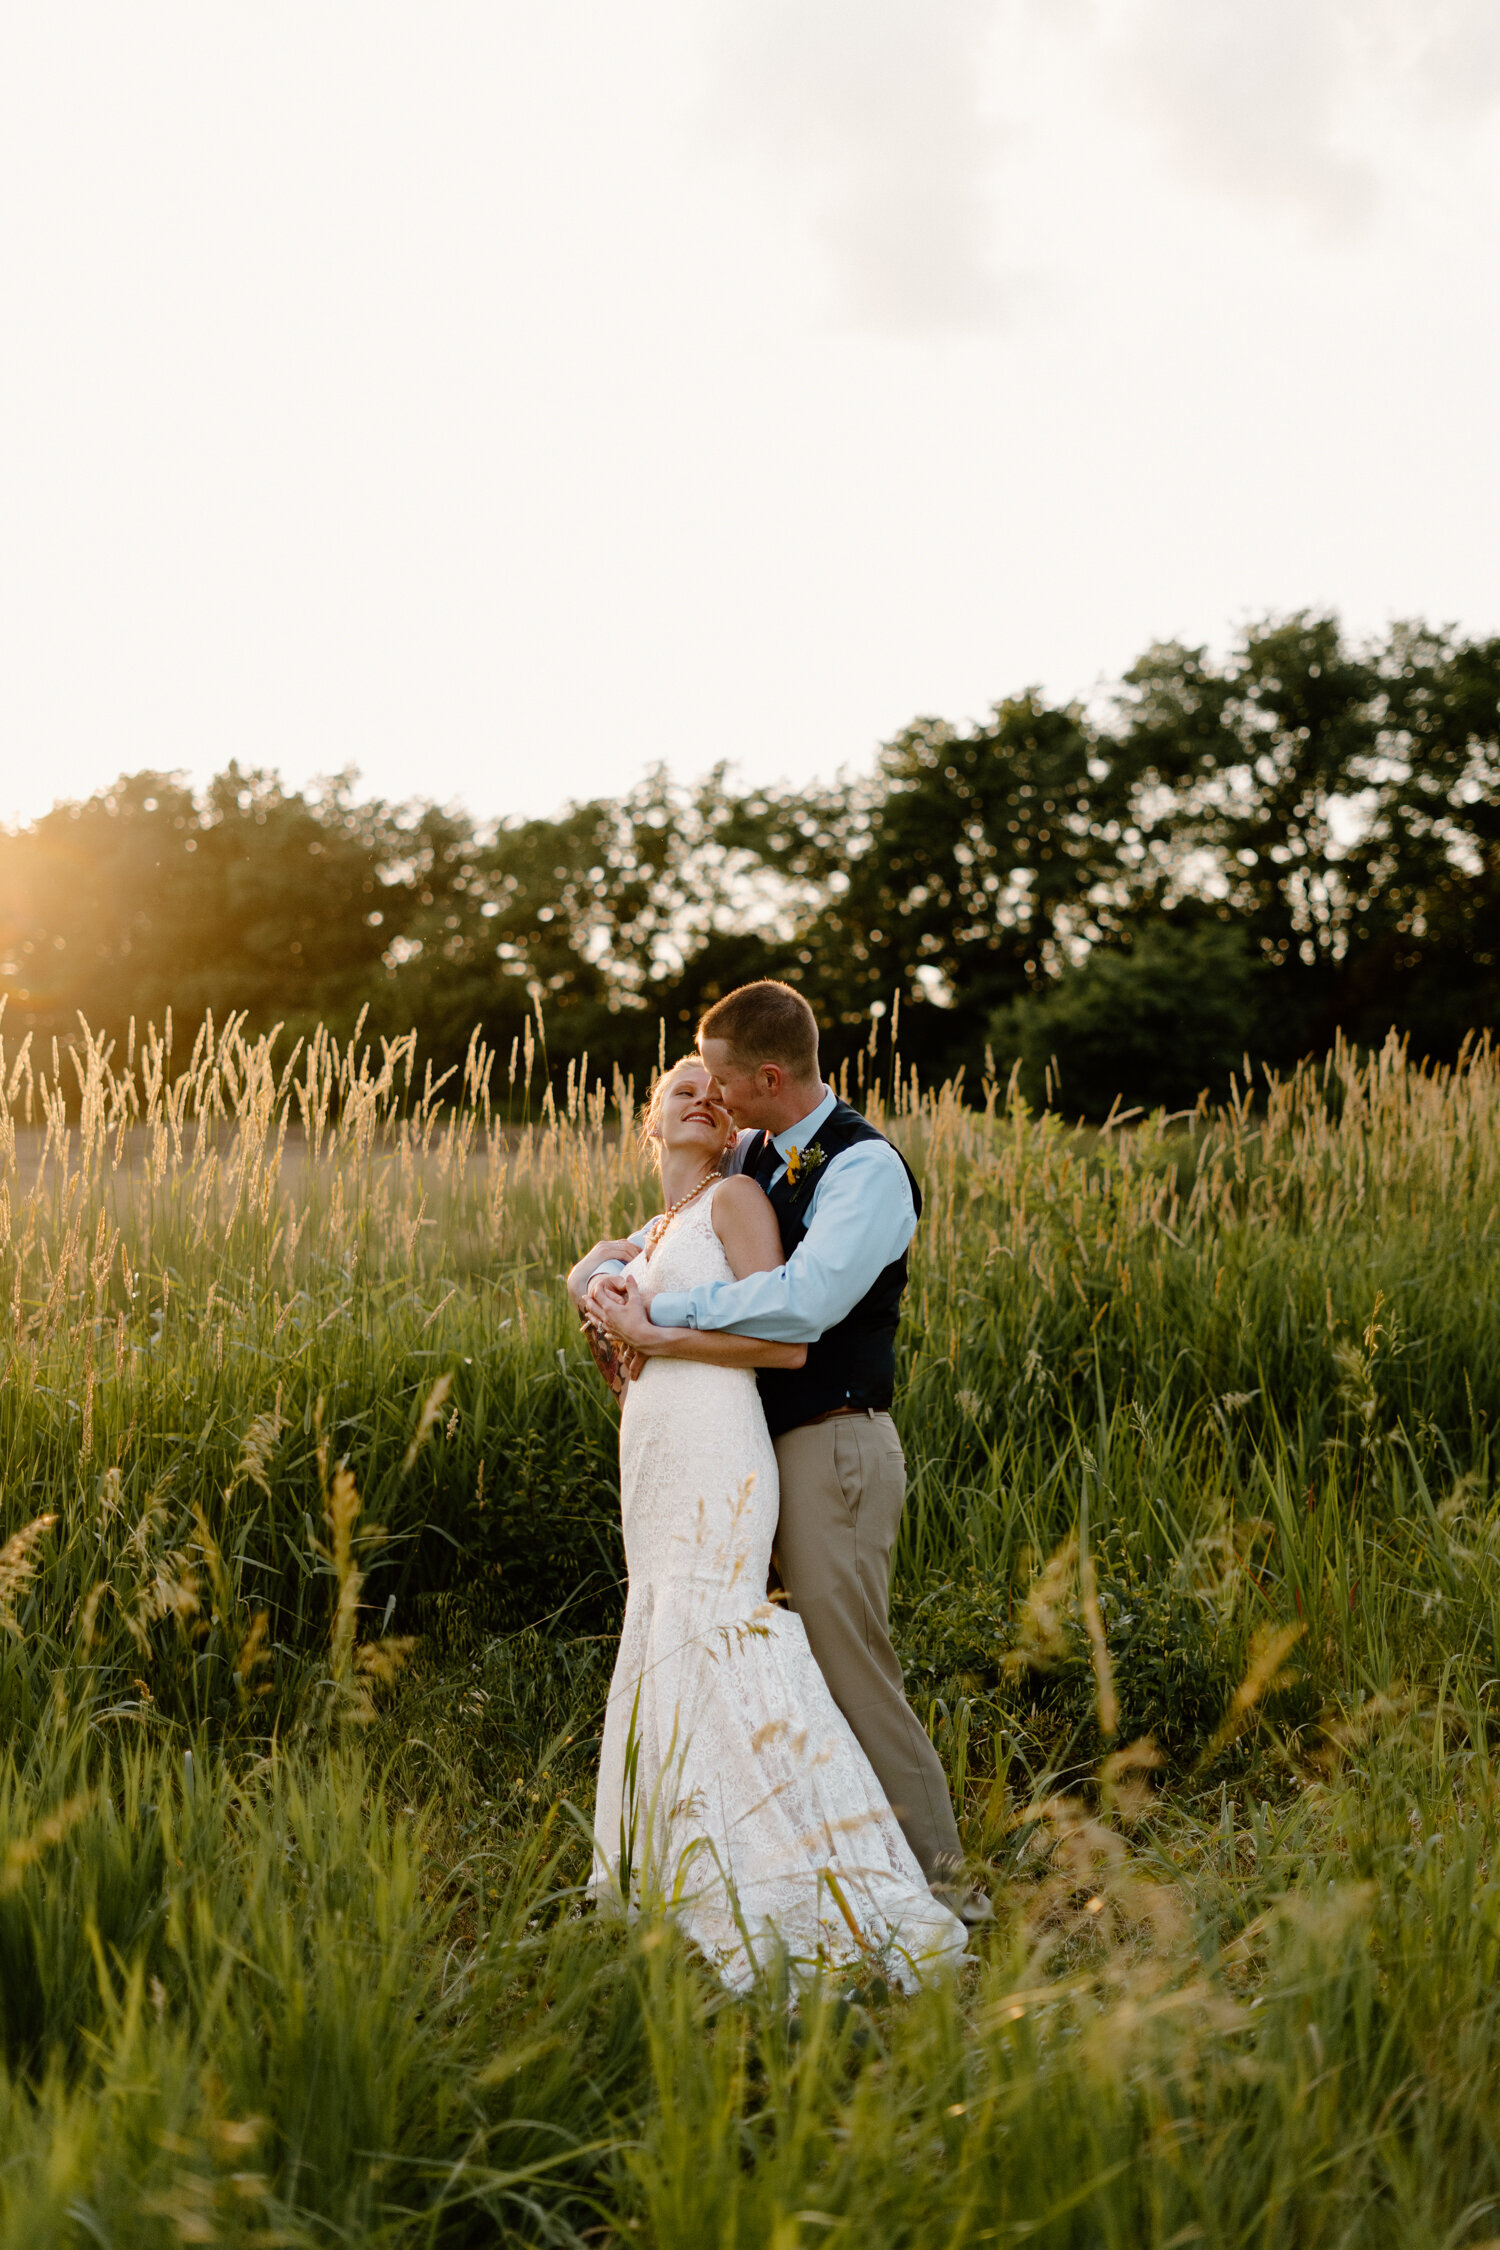 Leavenworth, Kansas Bride and Groom Newlywed Portraits by Kayli LaFon Photography | Intimate Travel Wedding & Elopement Photographer